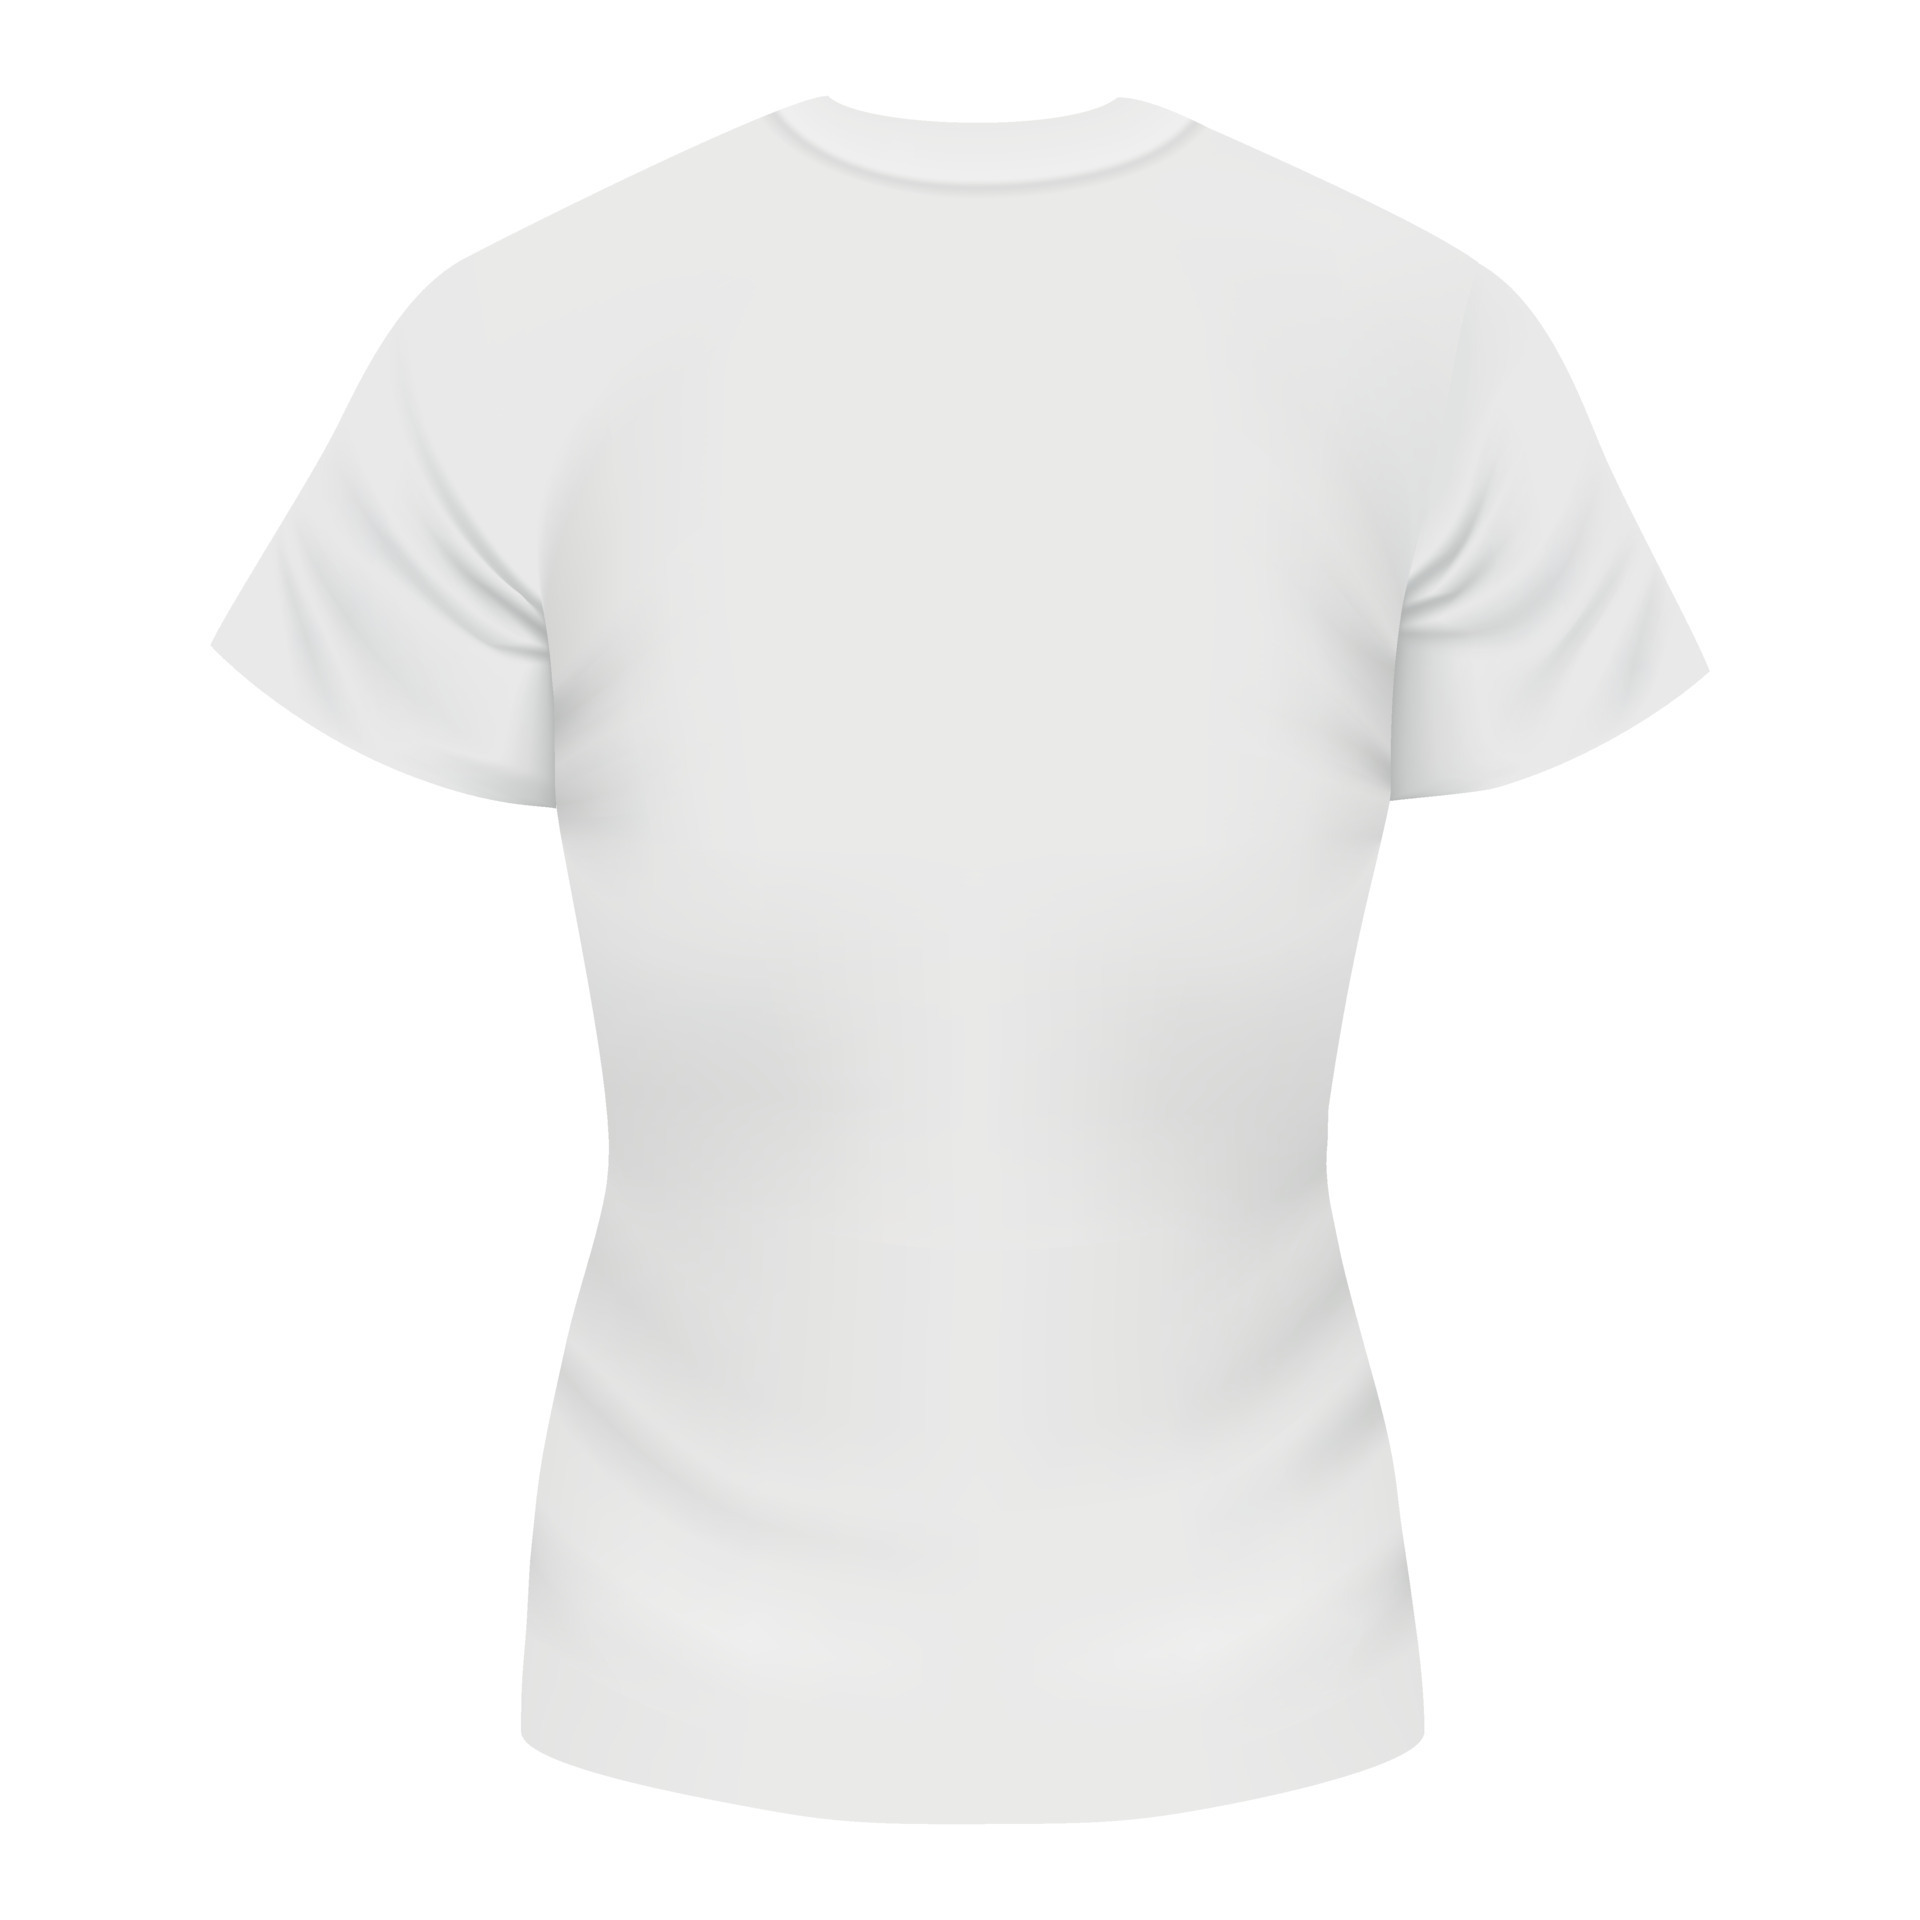 White female tshirt mockup, realistic style 15030967 Vector Art at Vecteezy